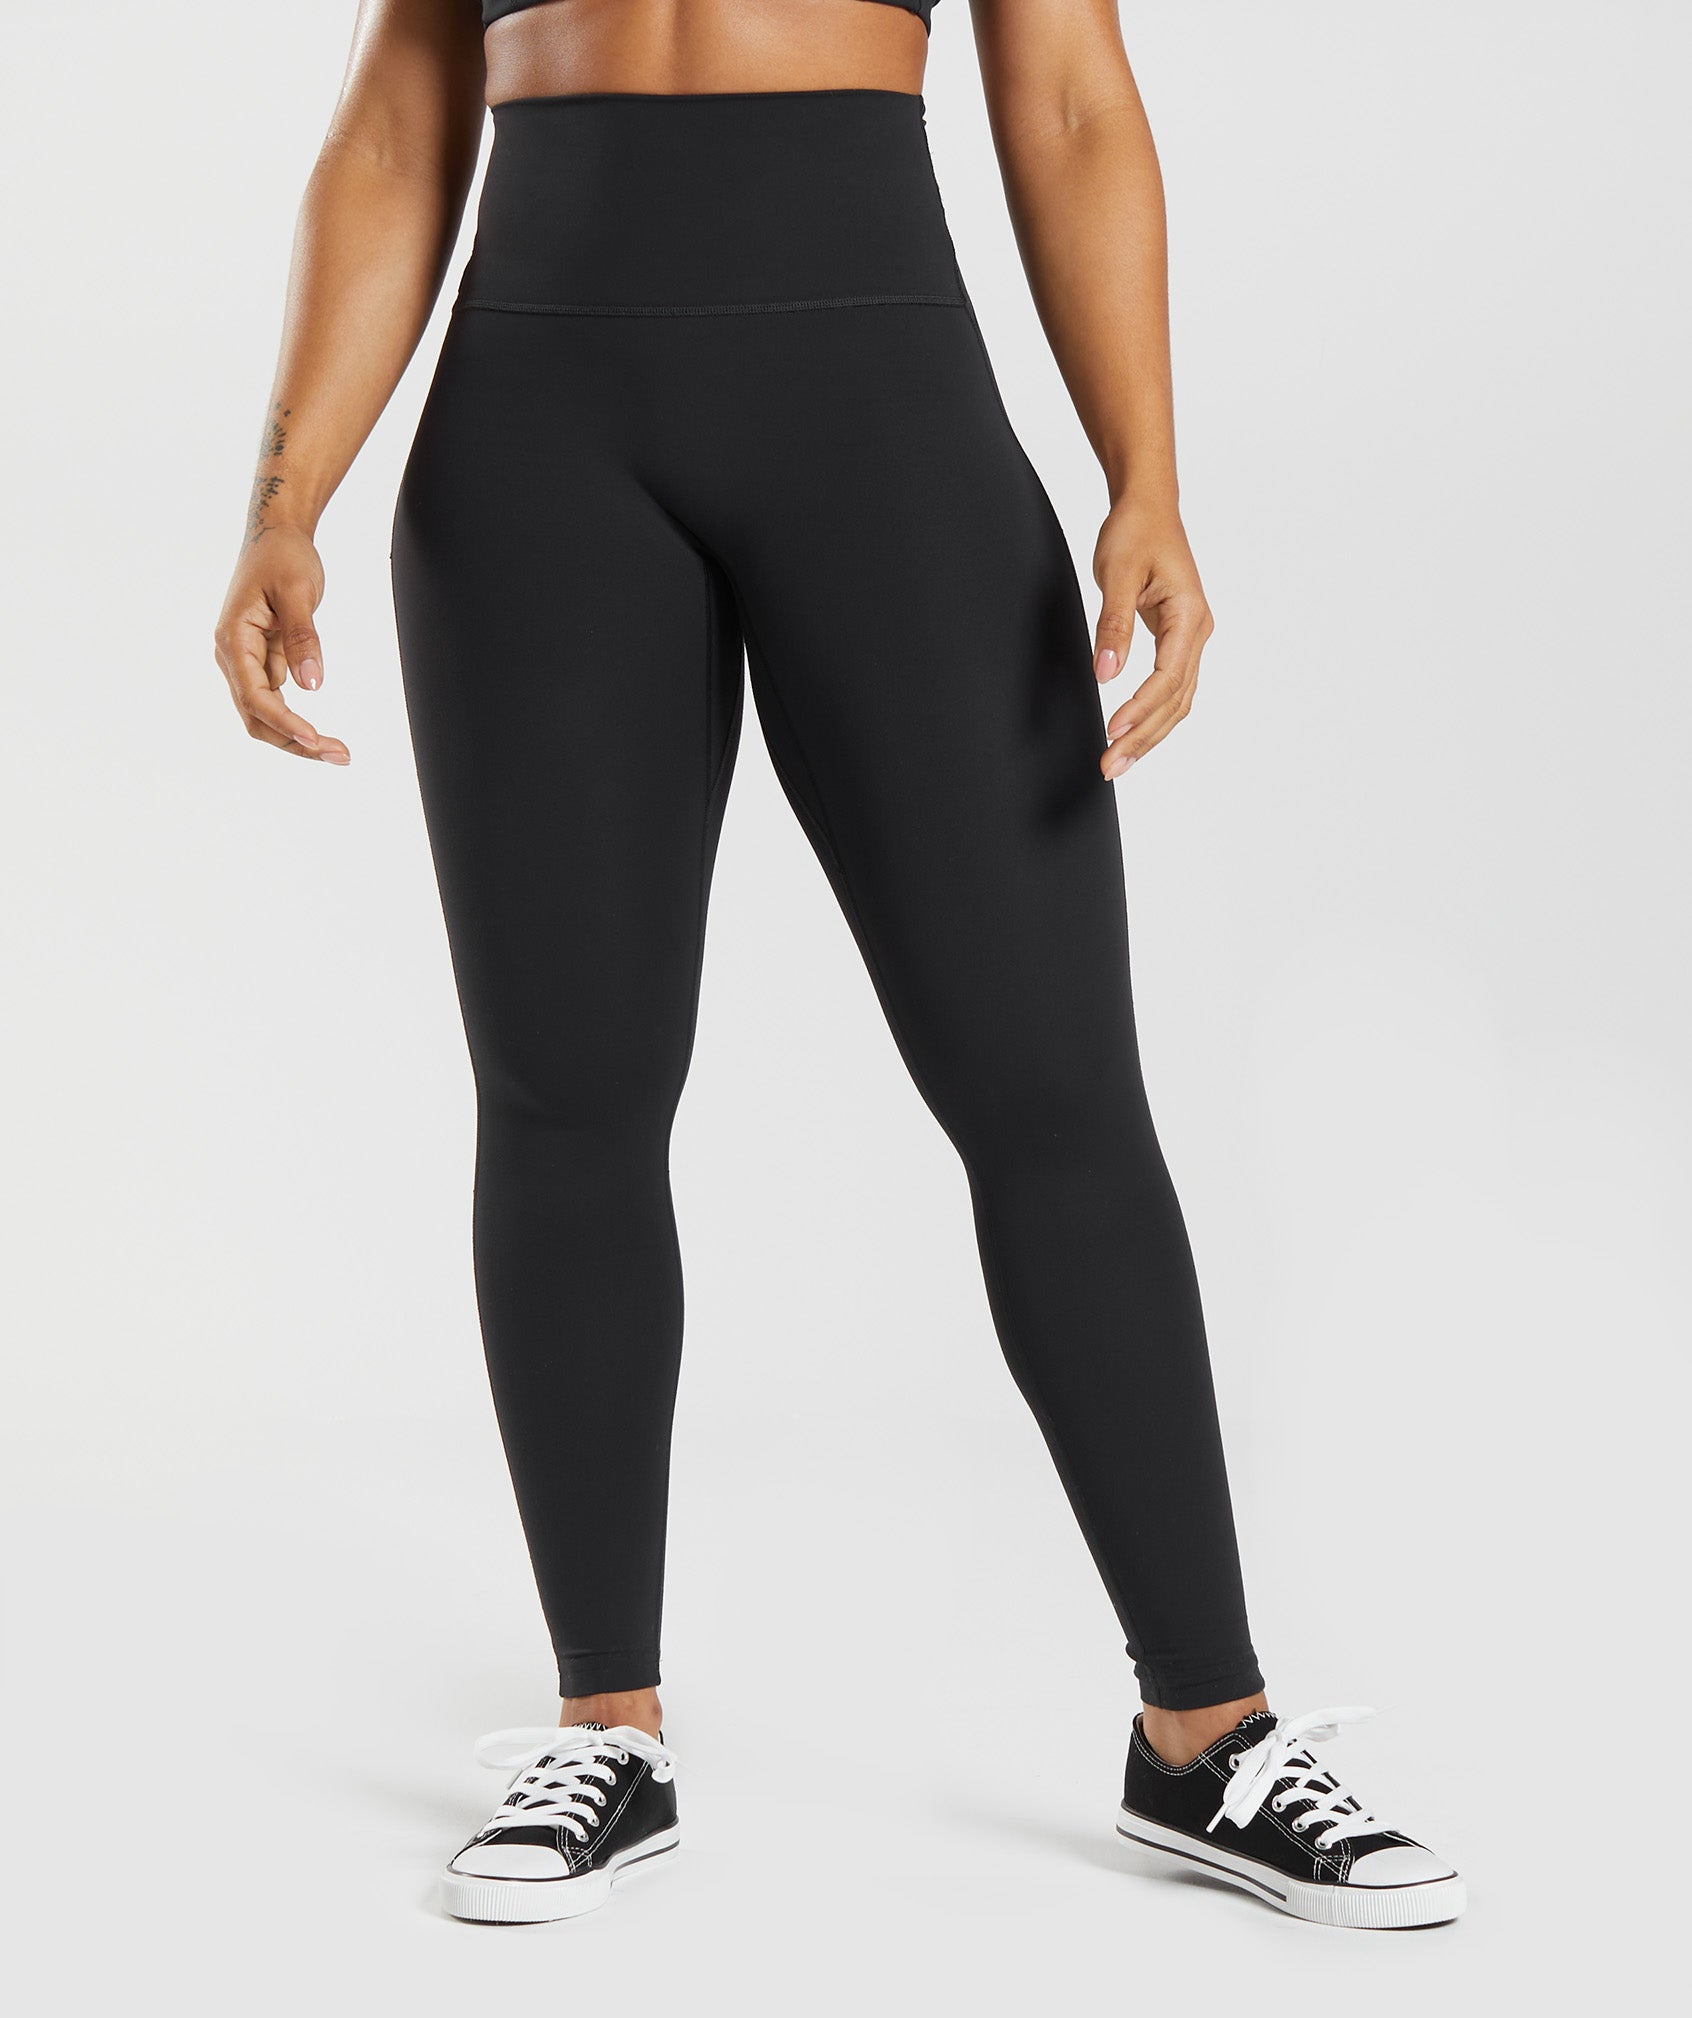 Gymshark Women's Black High Rise Activewear Training Cropped Leggings